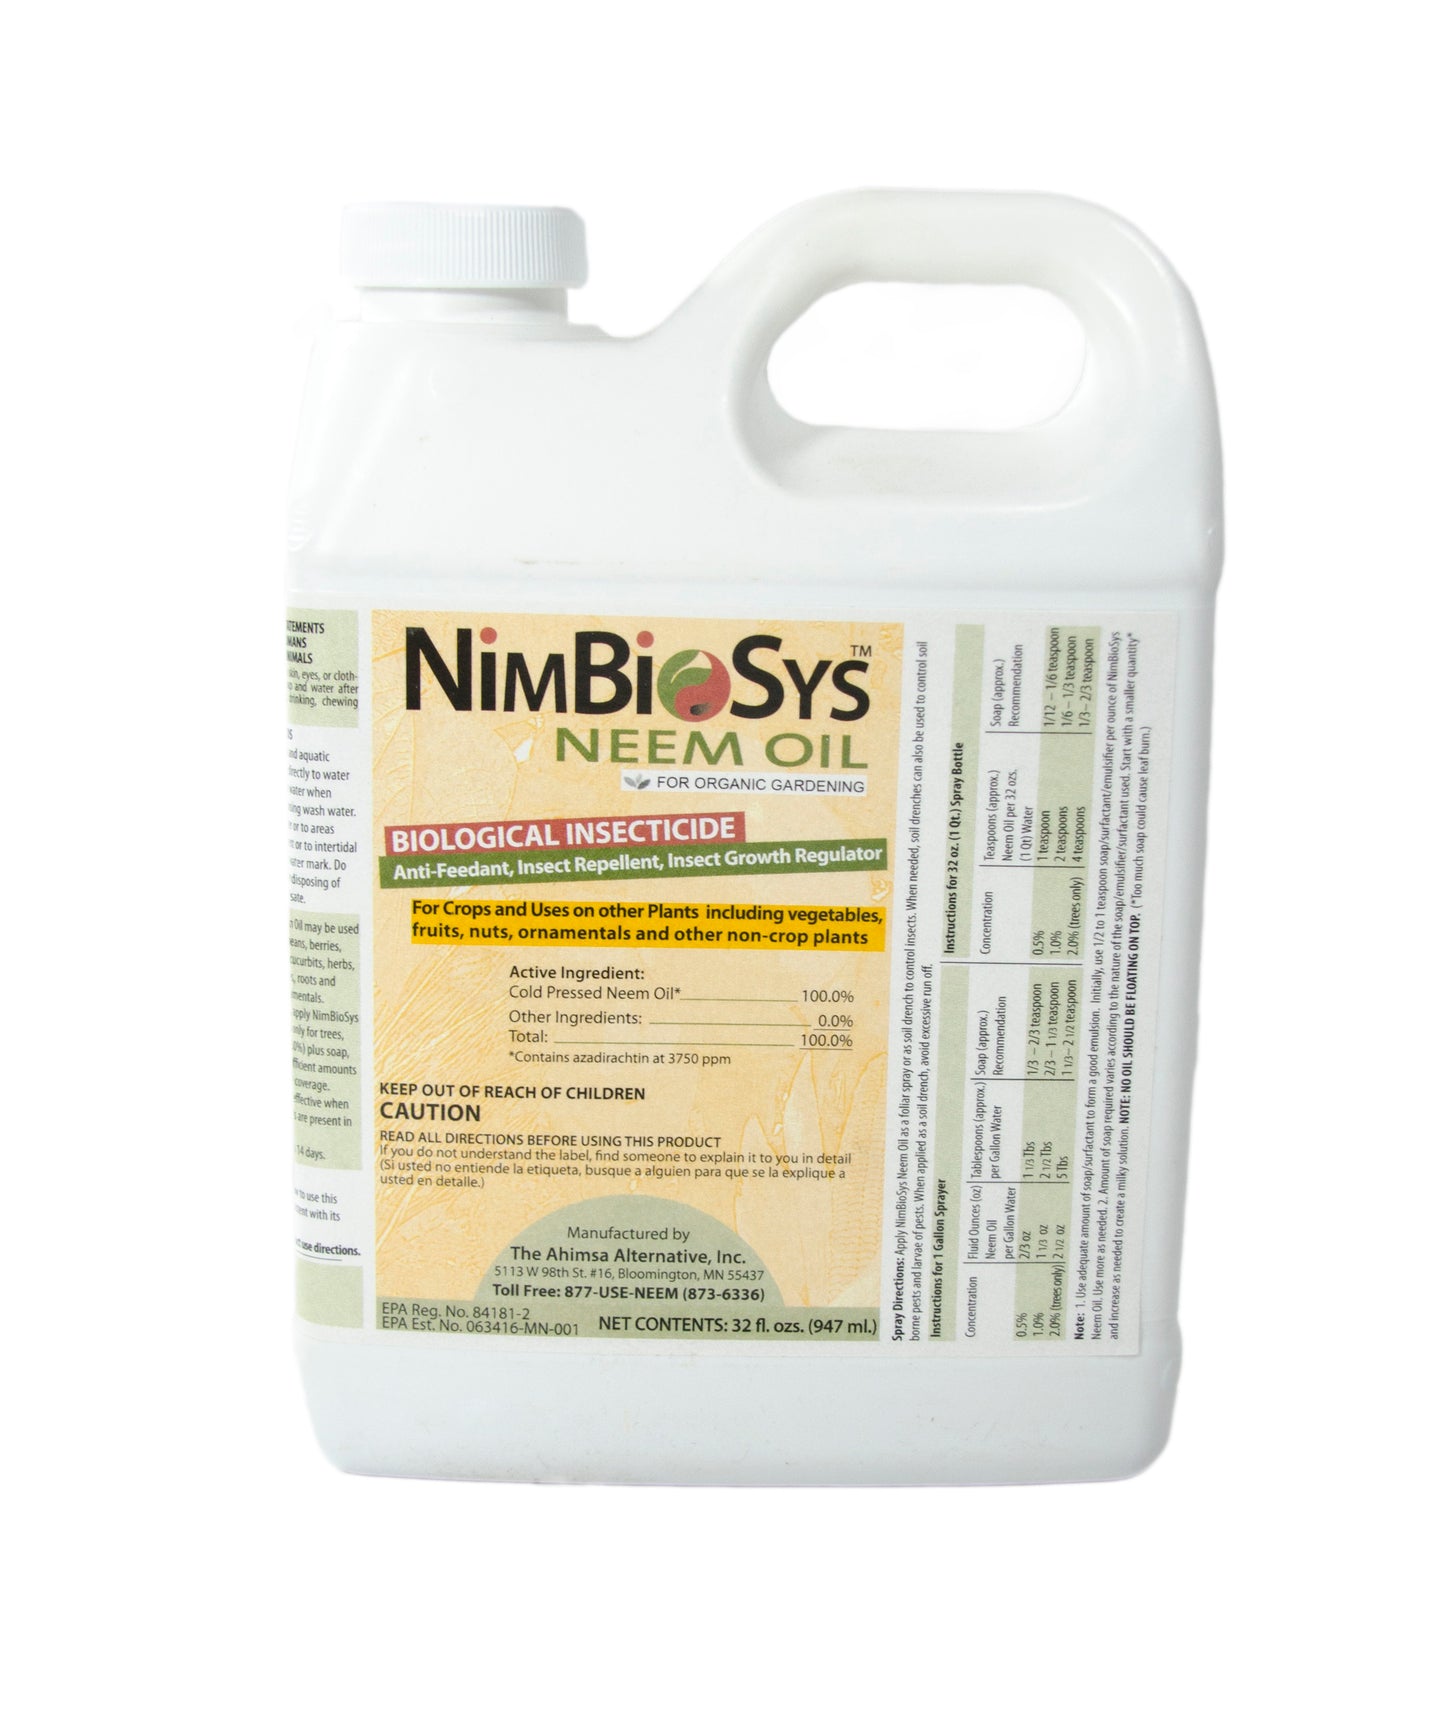 NimBioSyS Neem oil: Biological insecticide